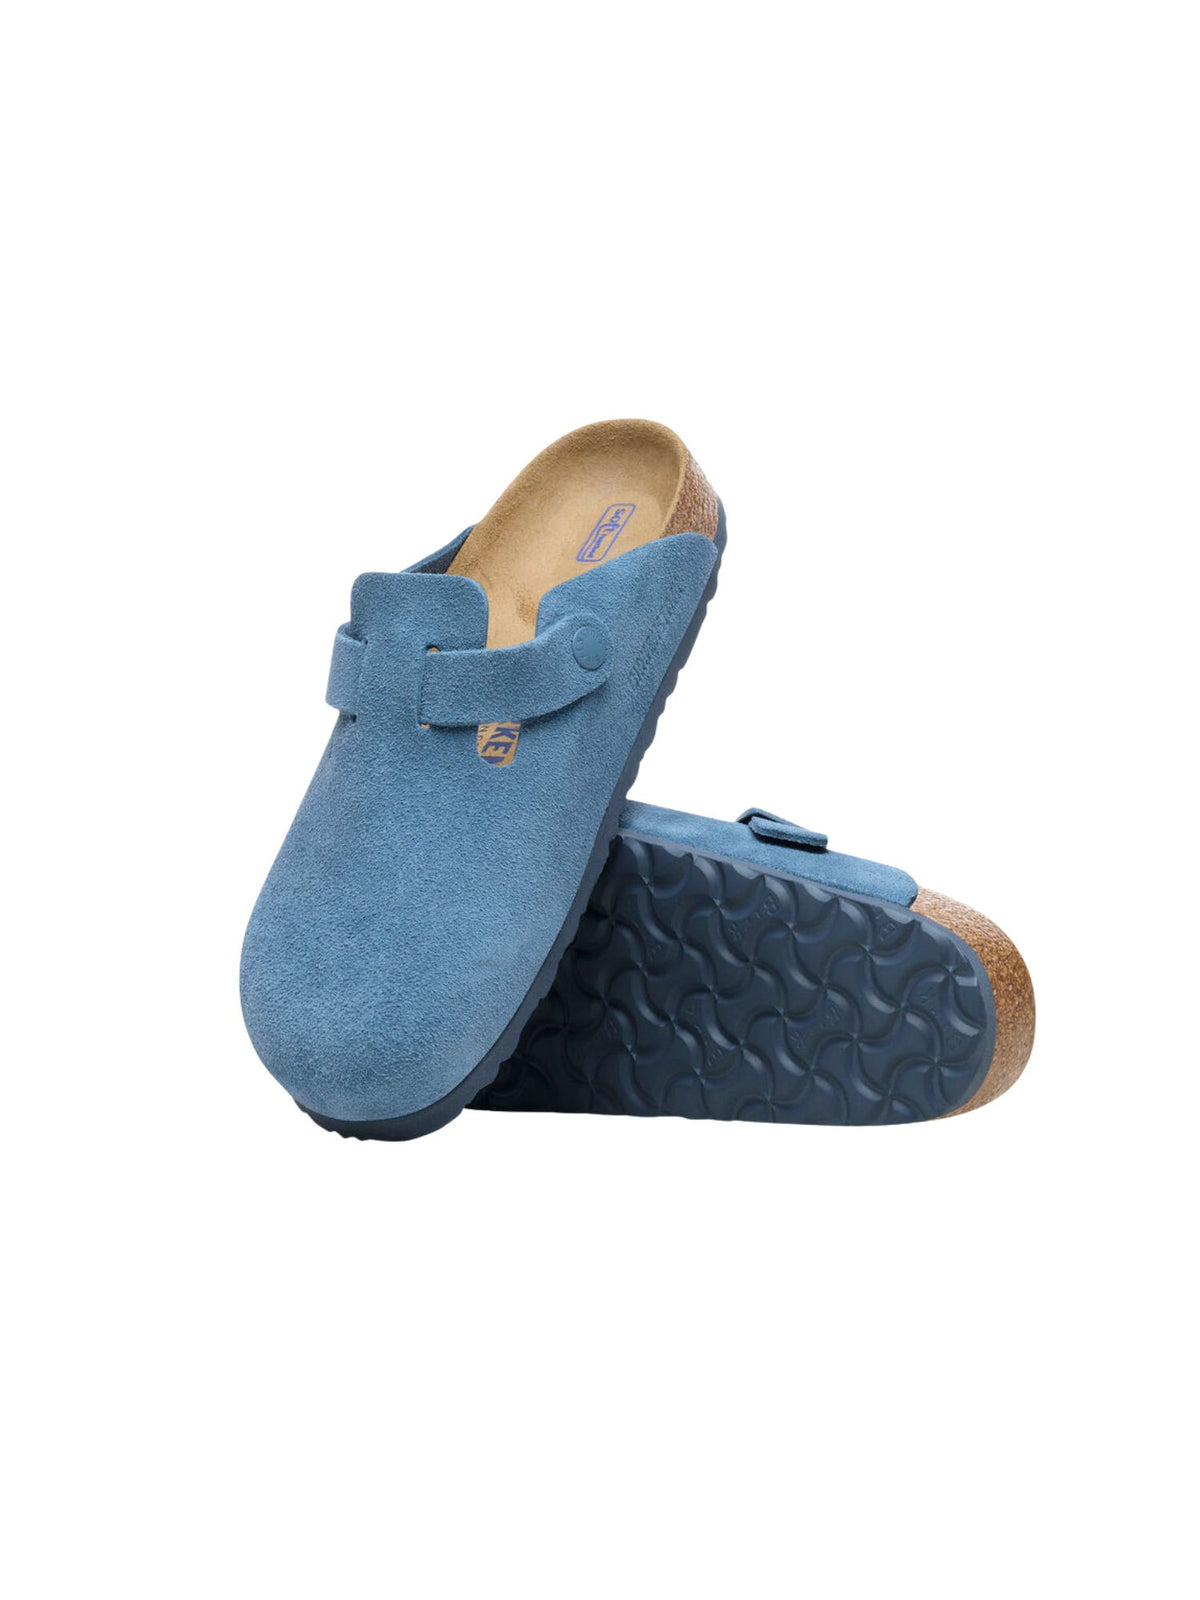 birkenstock boston soft footbed suede clog in elemental blue-pair view